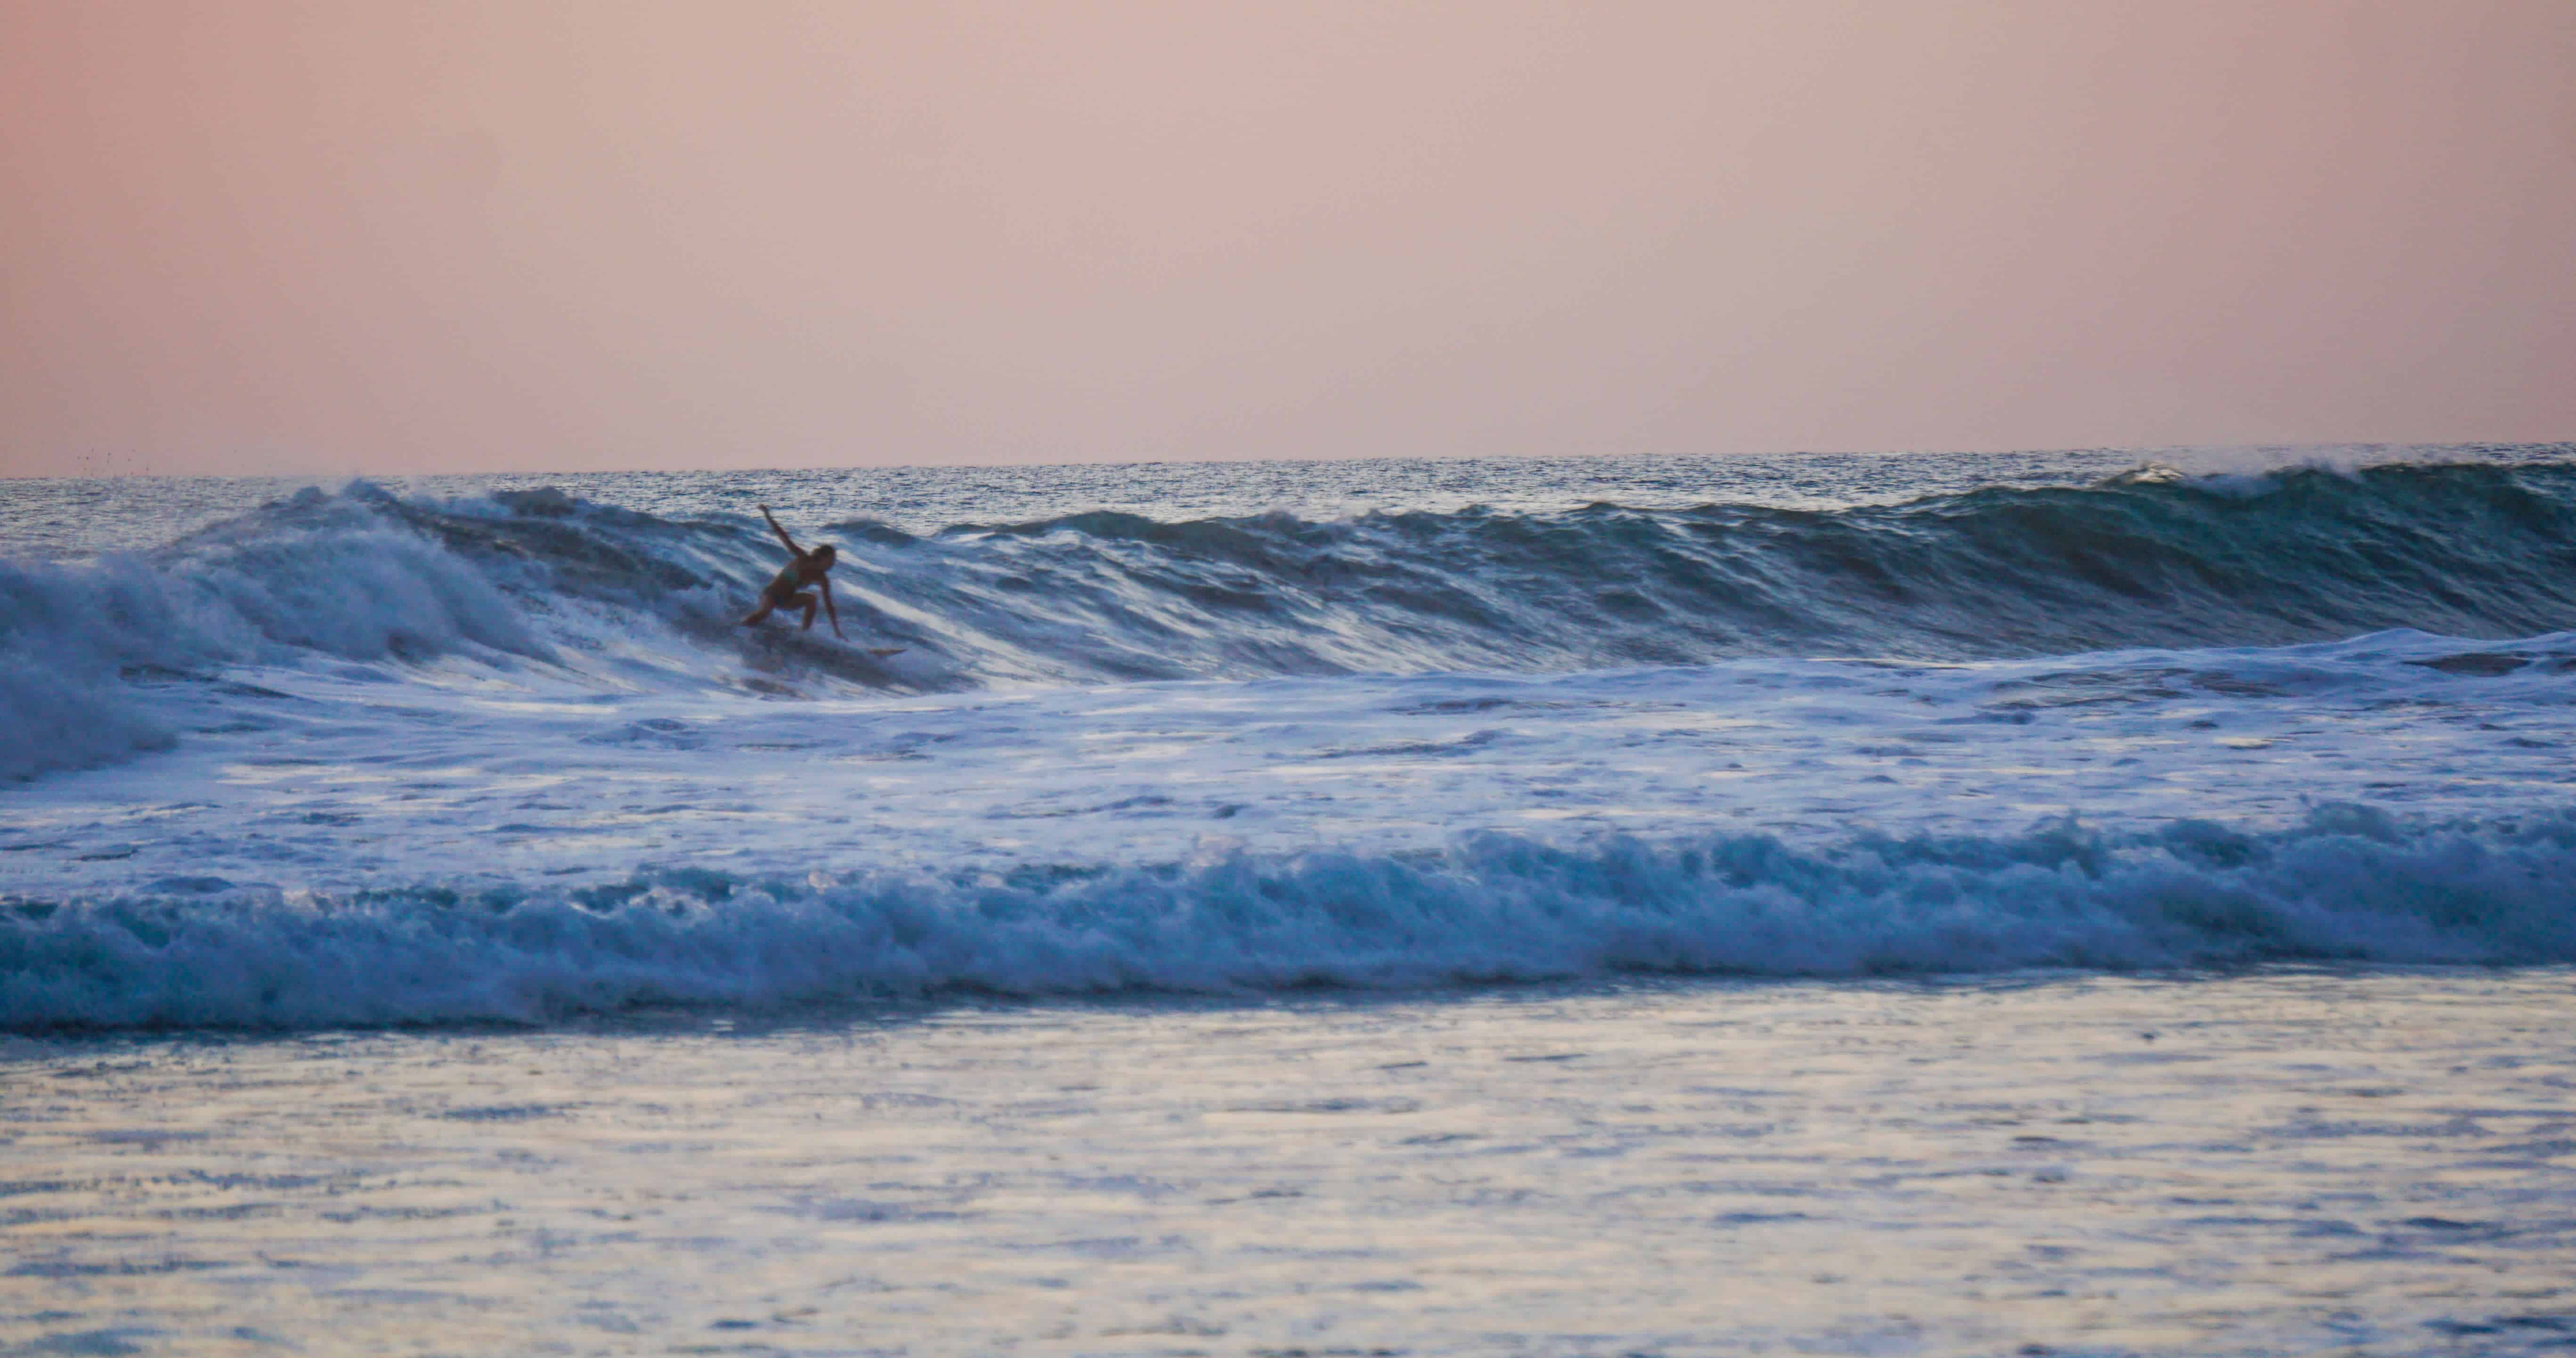 Surfer in Santa Teresa nicoya peninsula